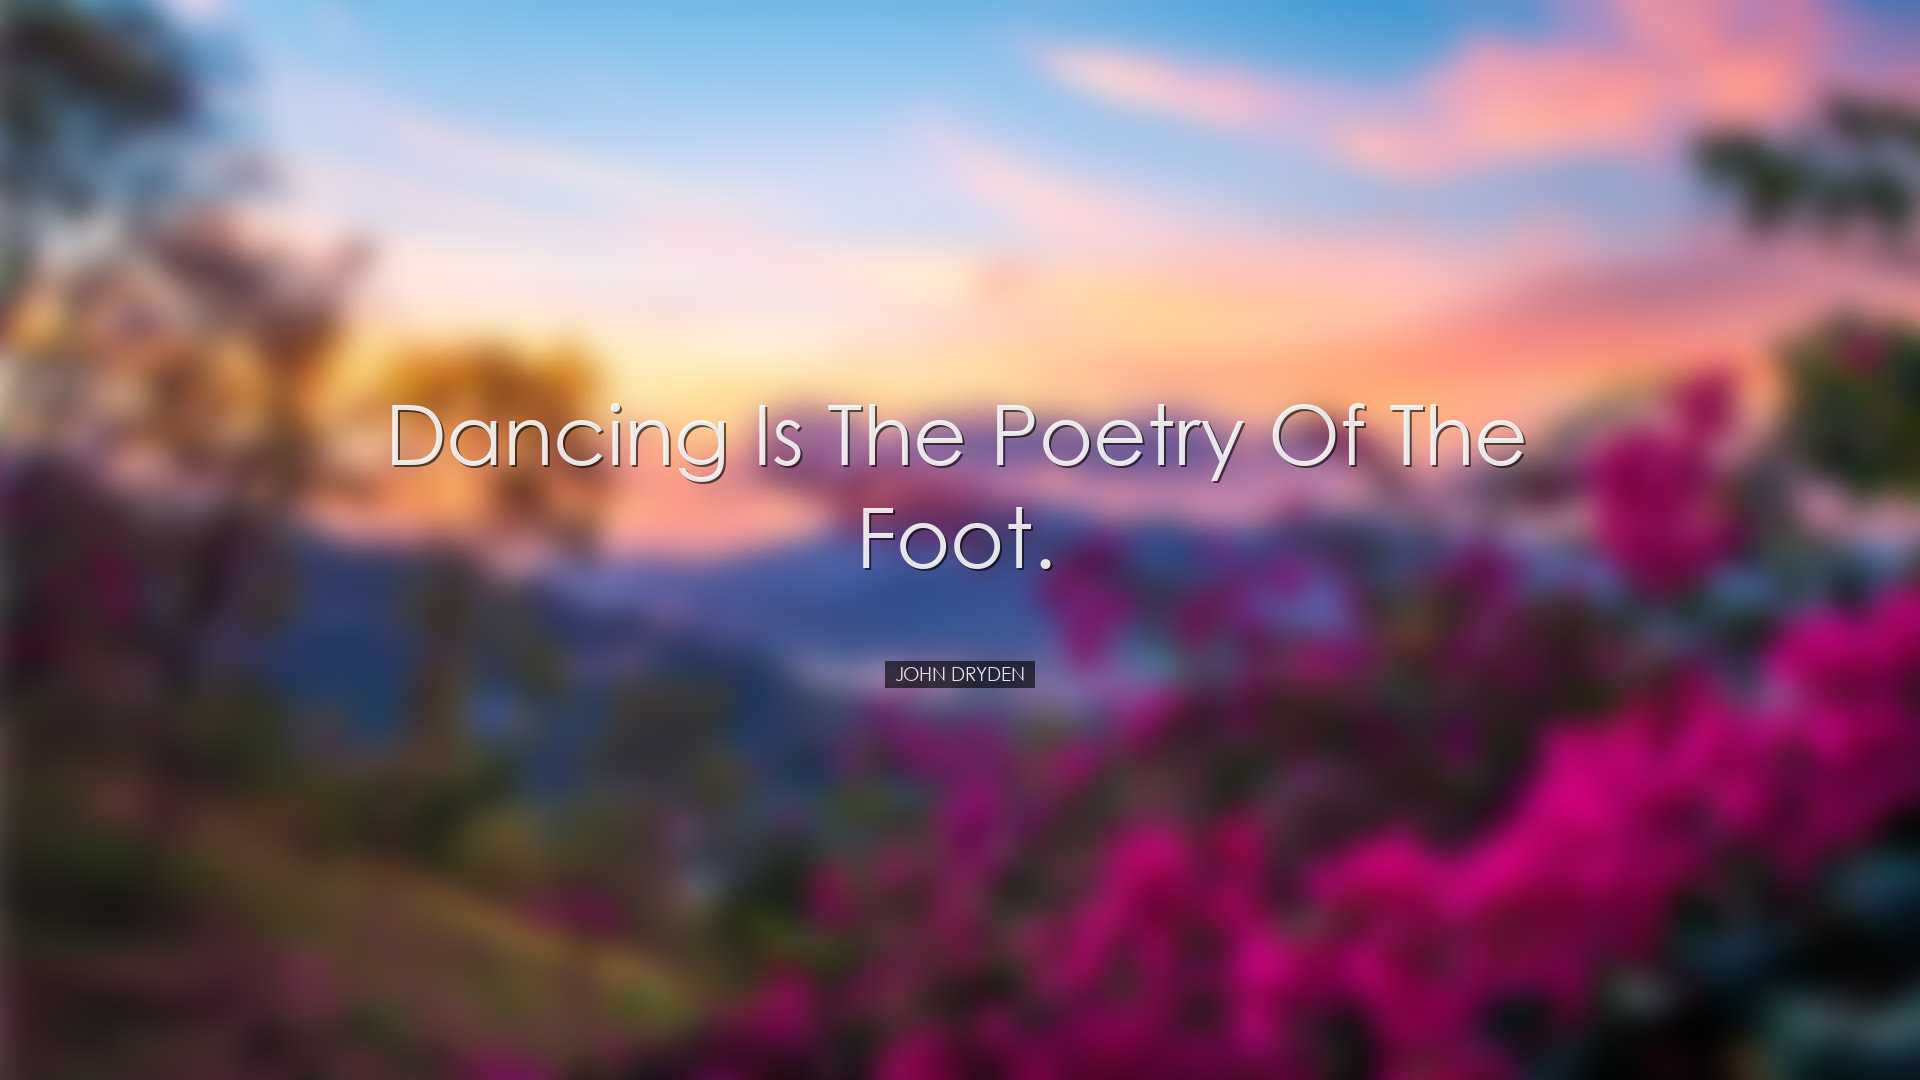 Dancing is the poetry of the foot. - John Dryden